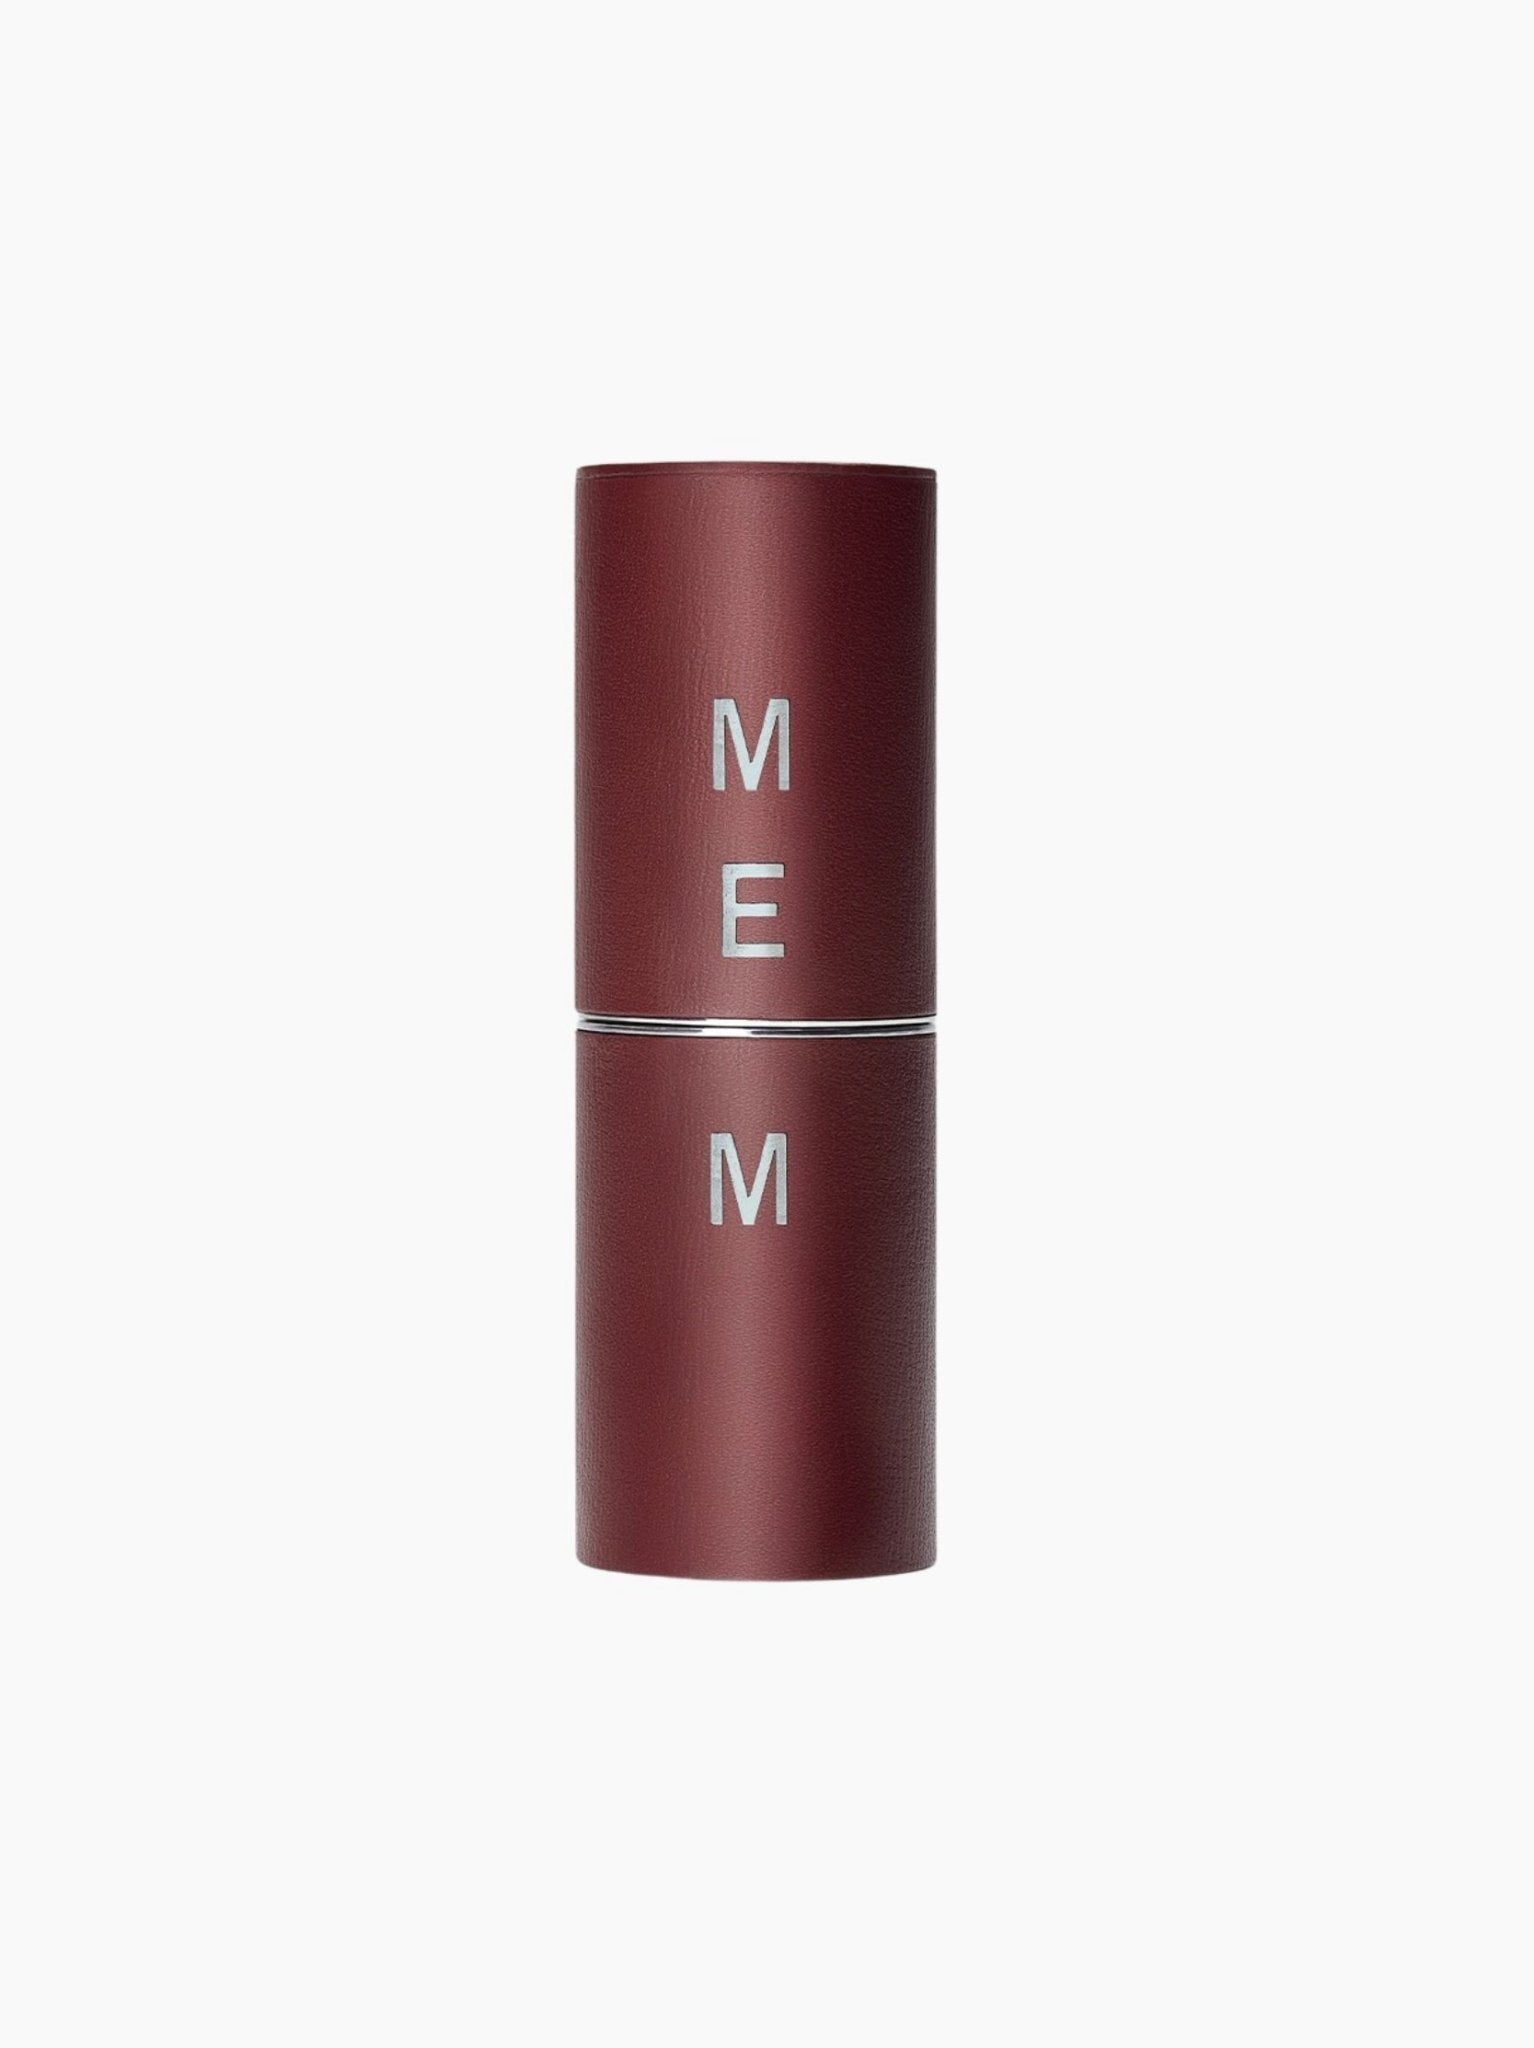 Chocolate Leather Lipstick Case